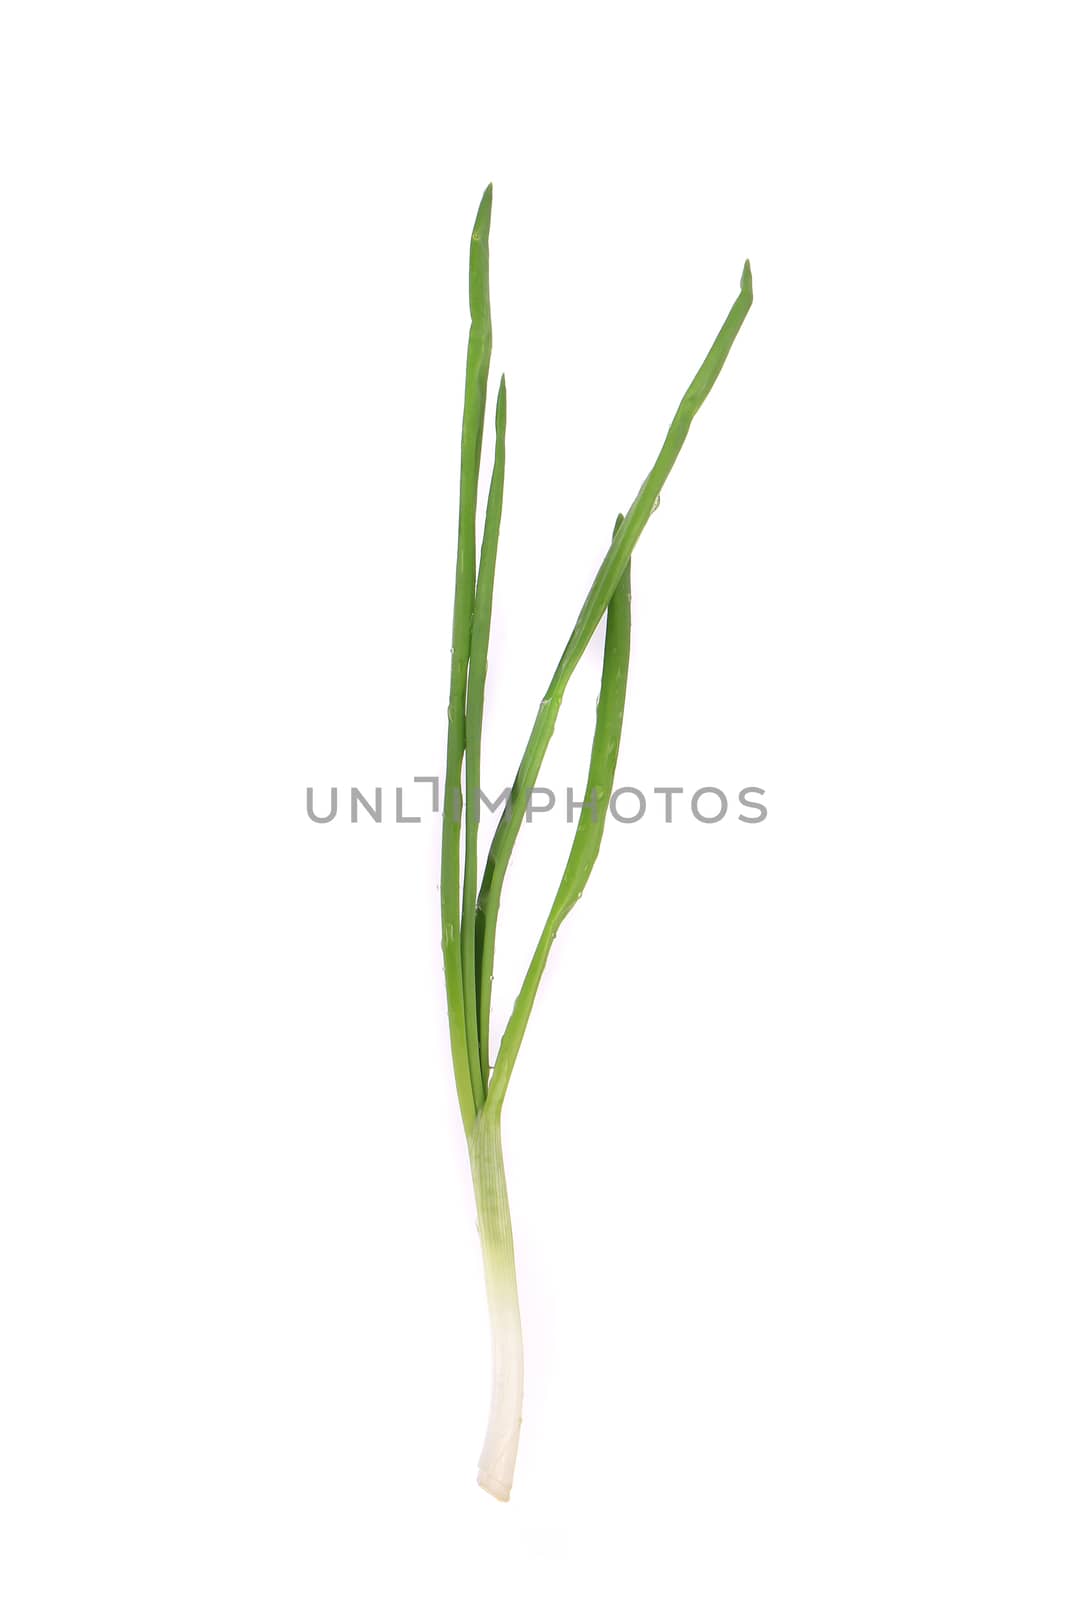 Green onion. by indigolotos